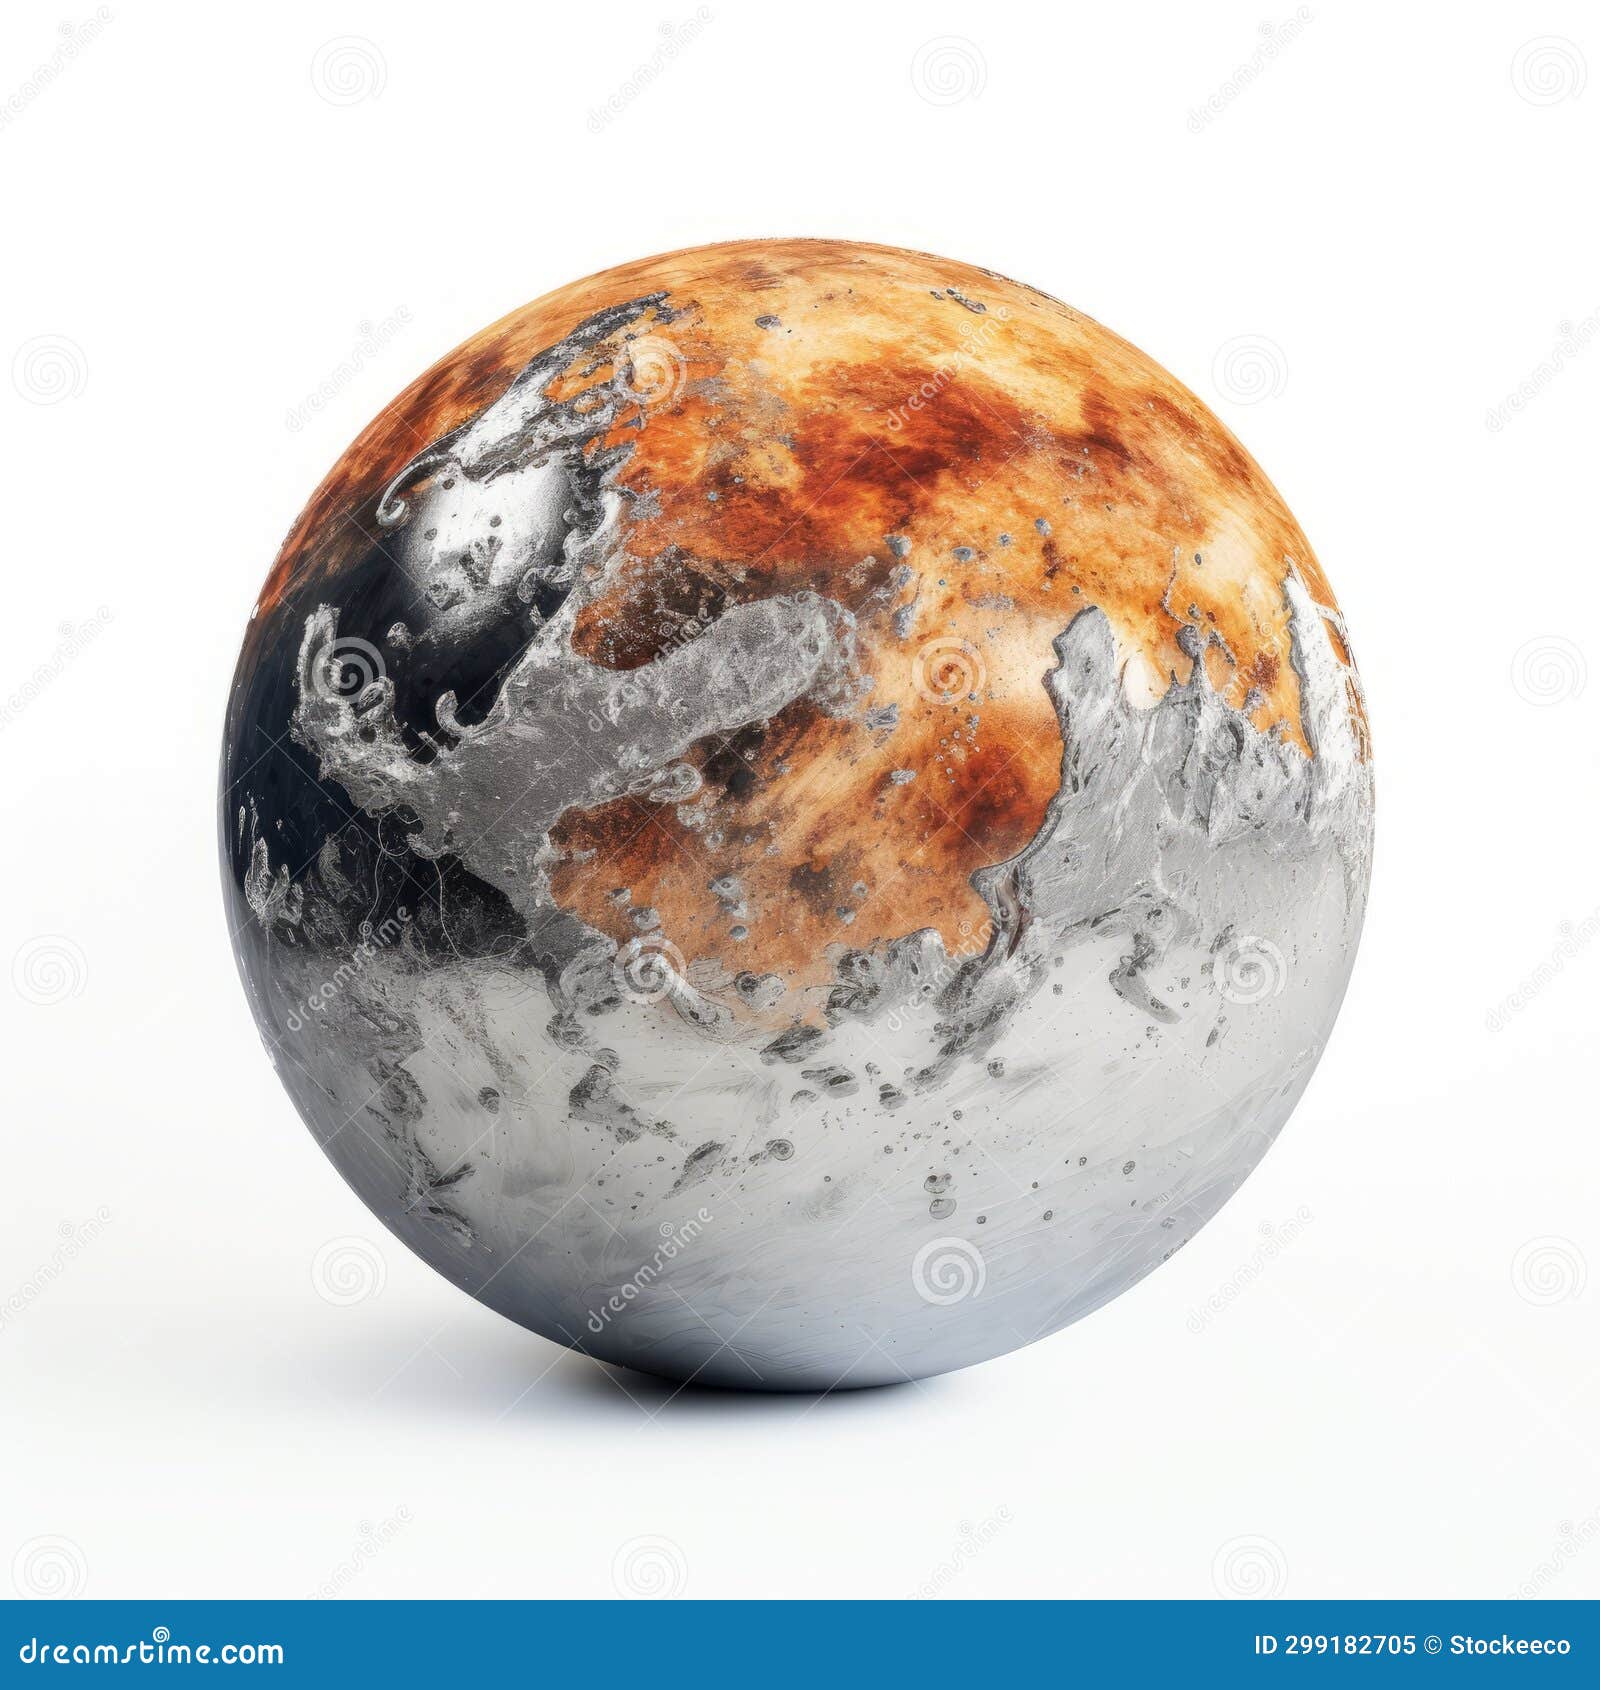 planeta russe: a surrealistic ceramic sculpture of planet earth